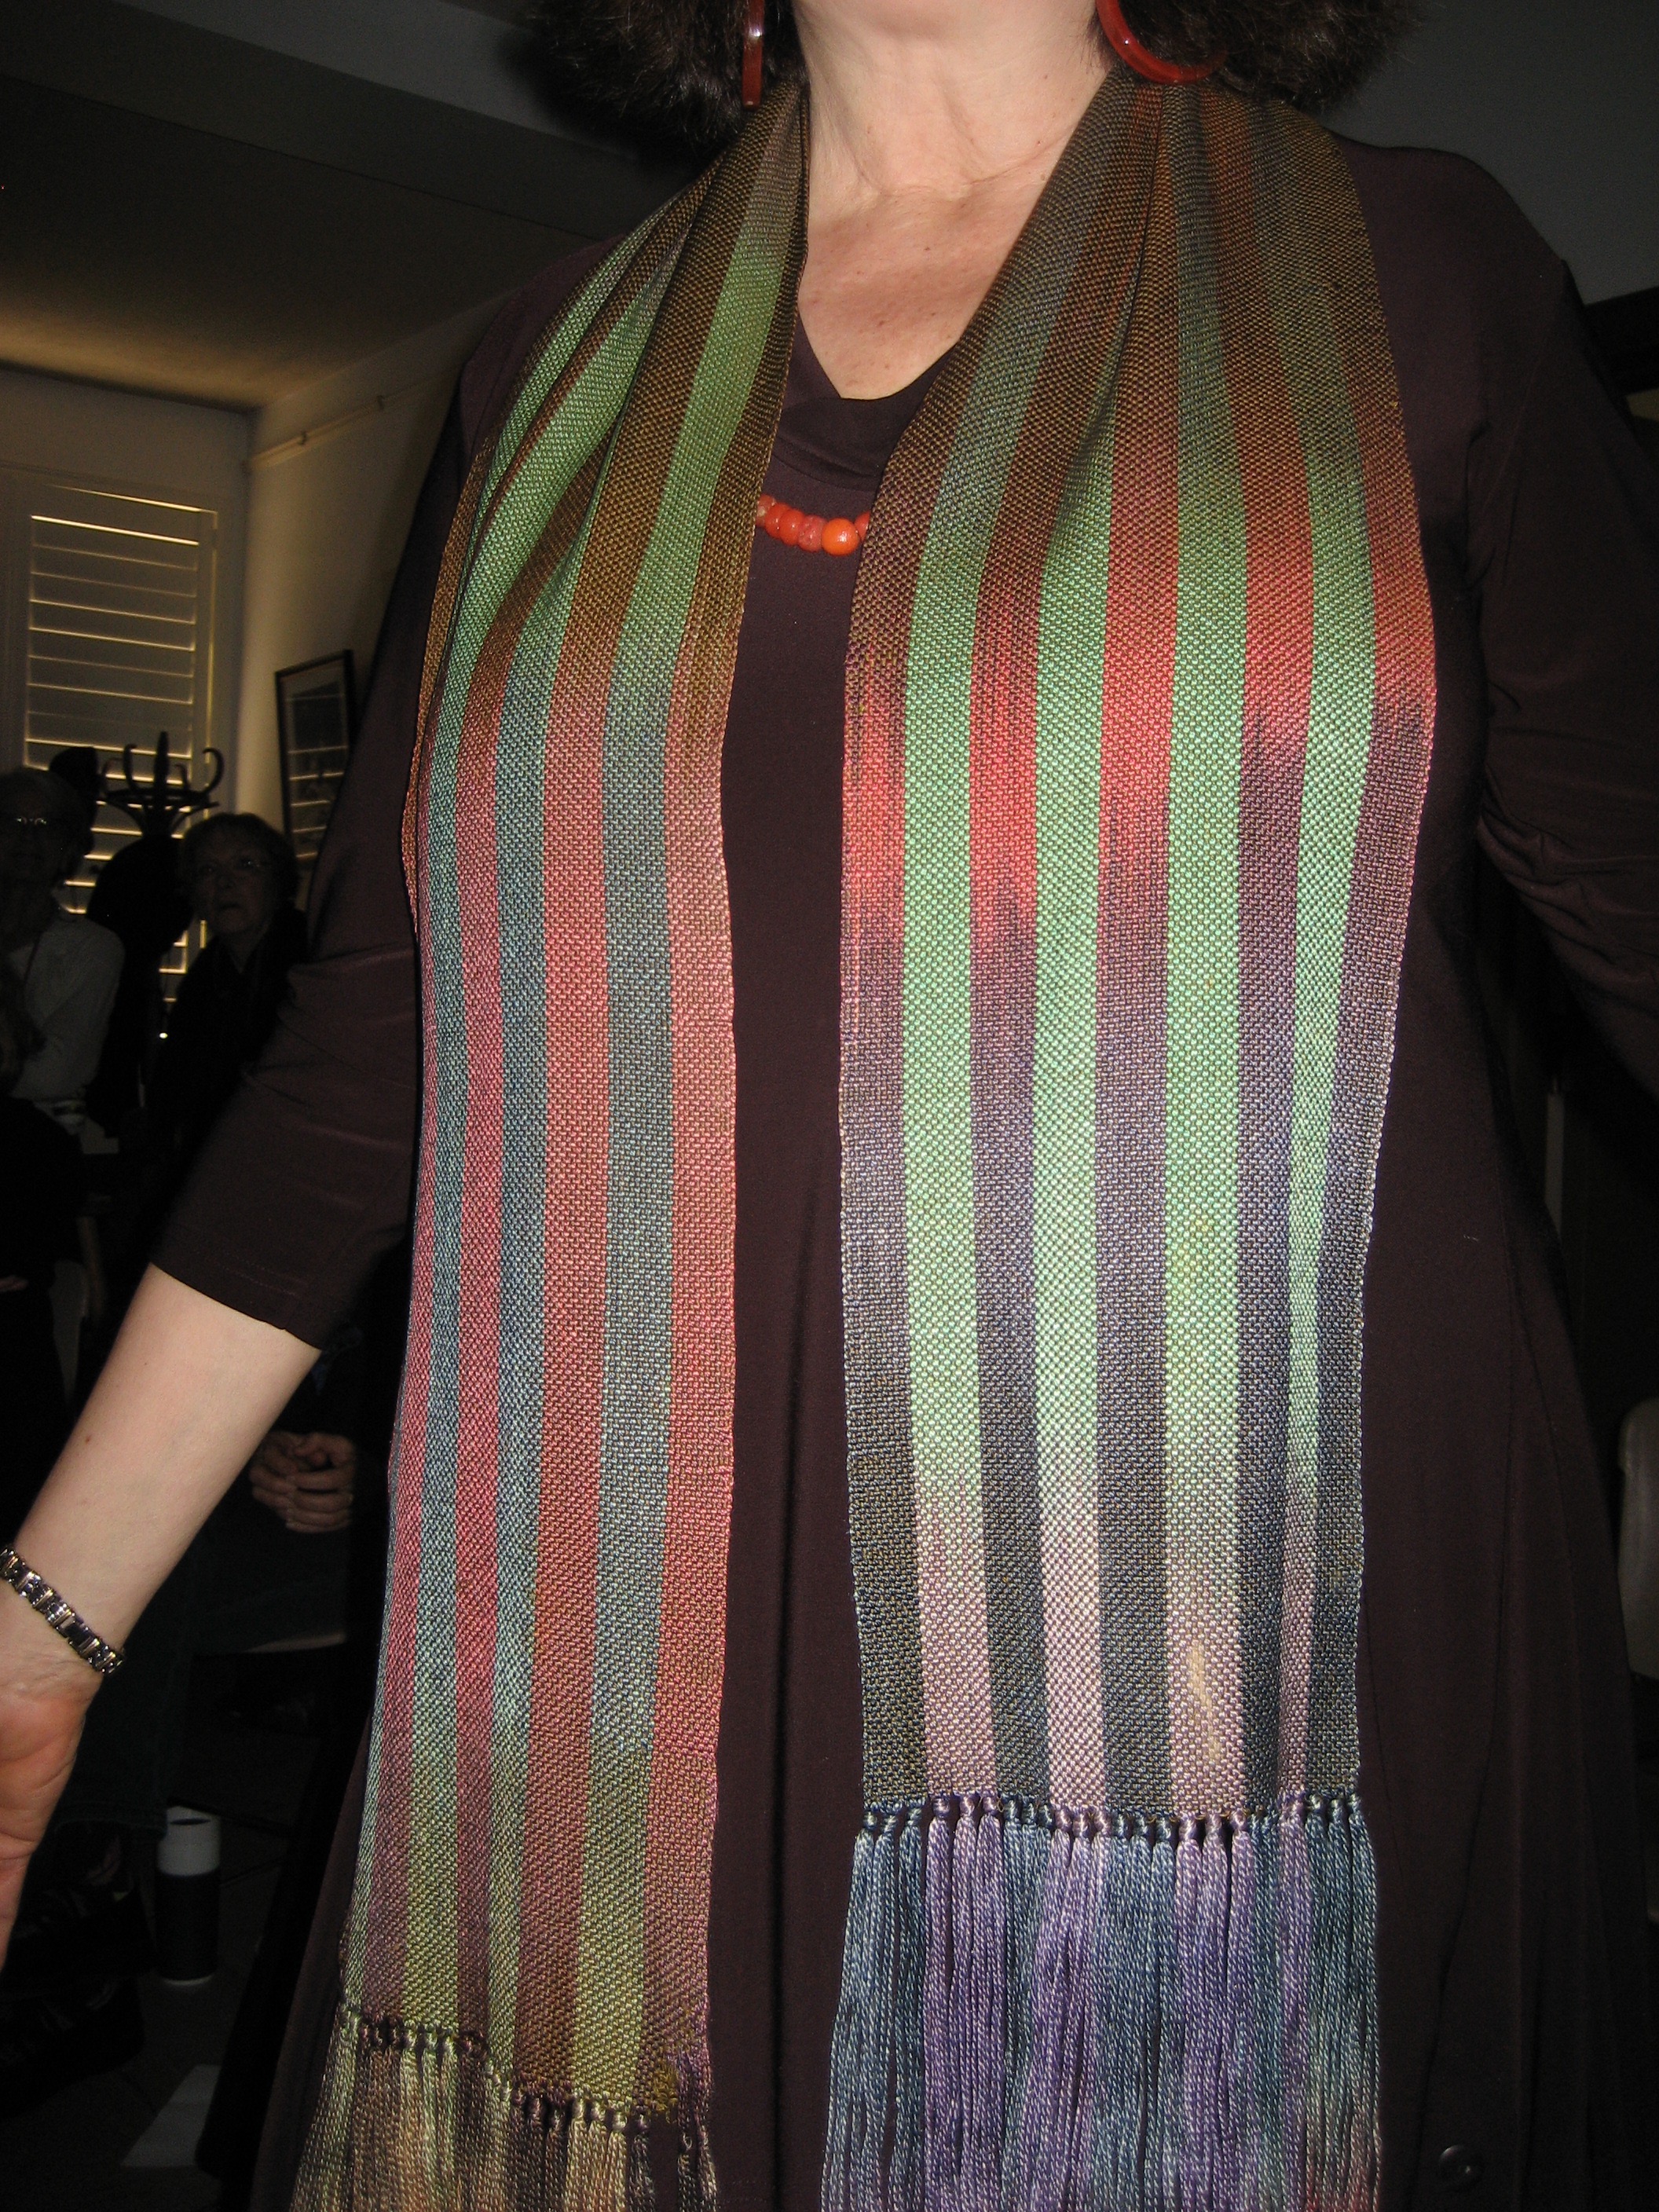 Deborah'si scarf